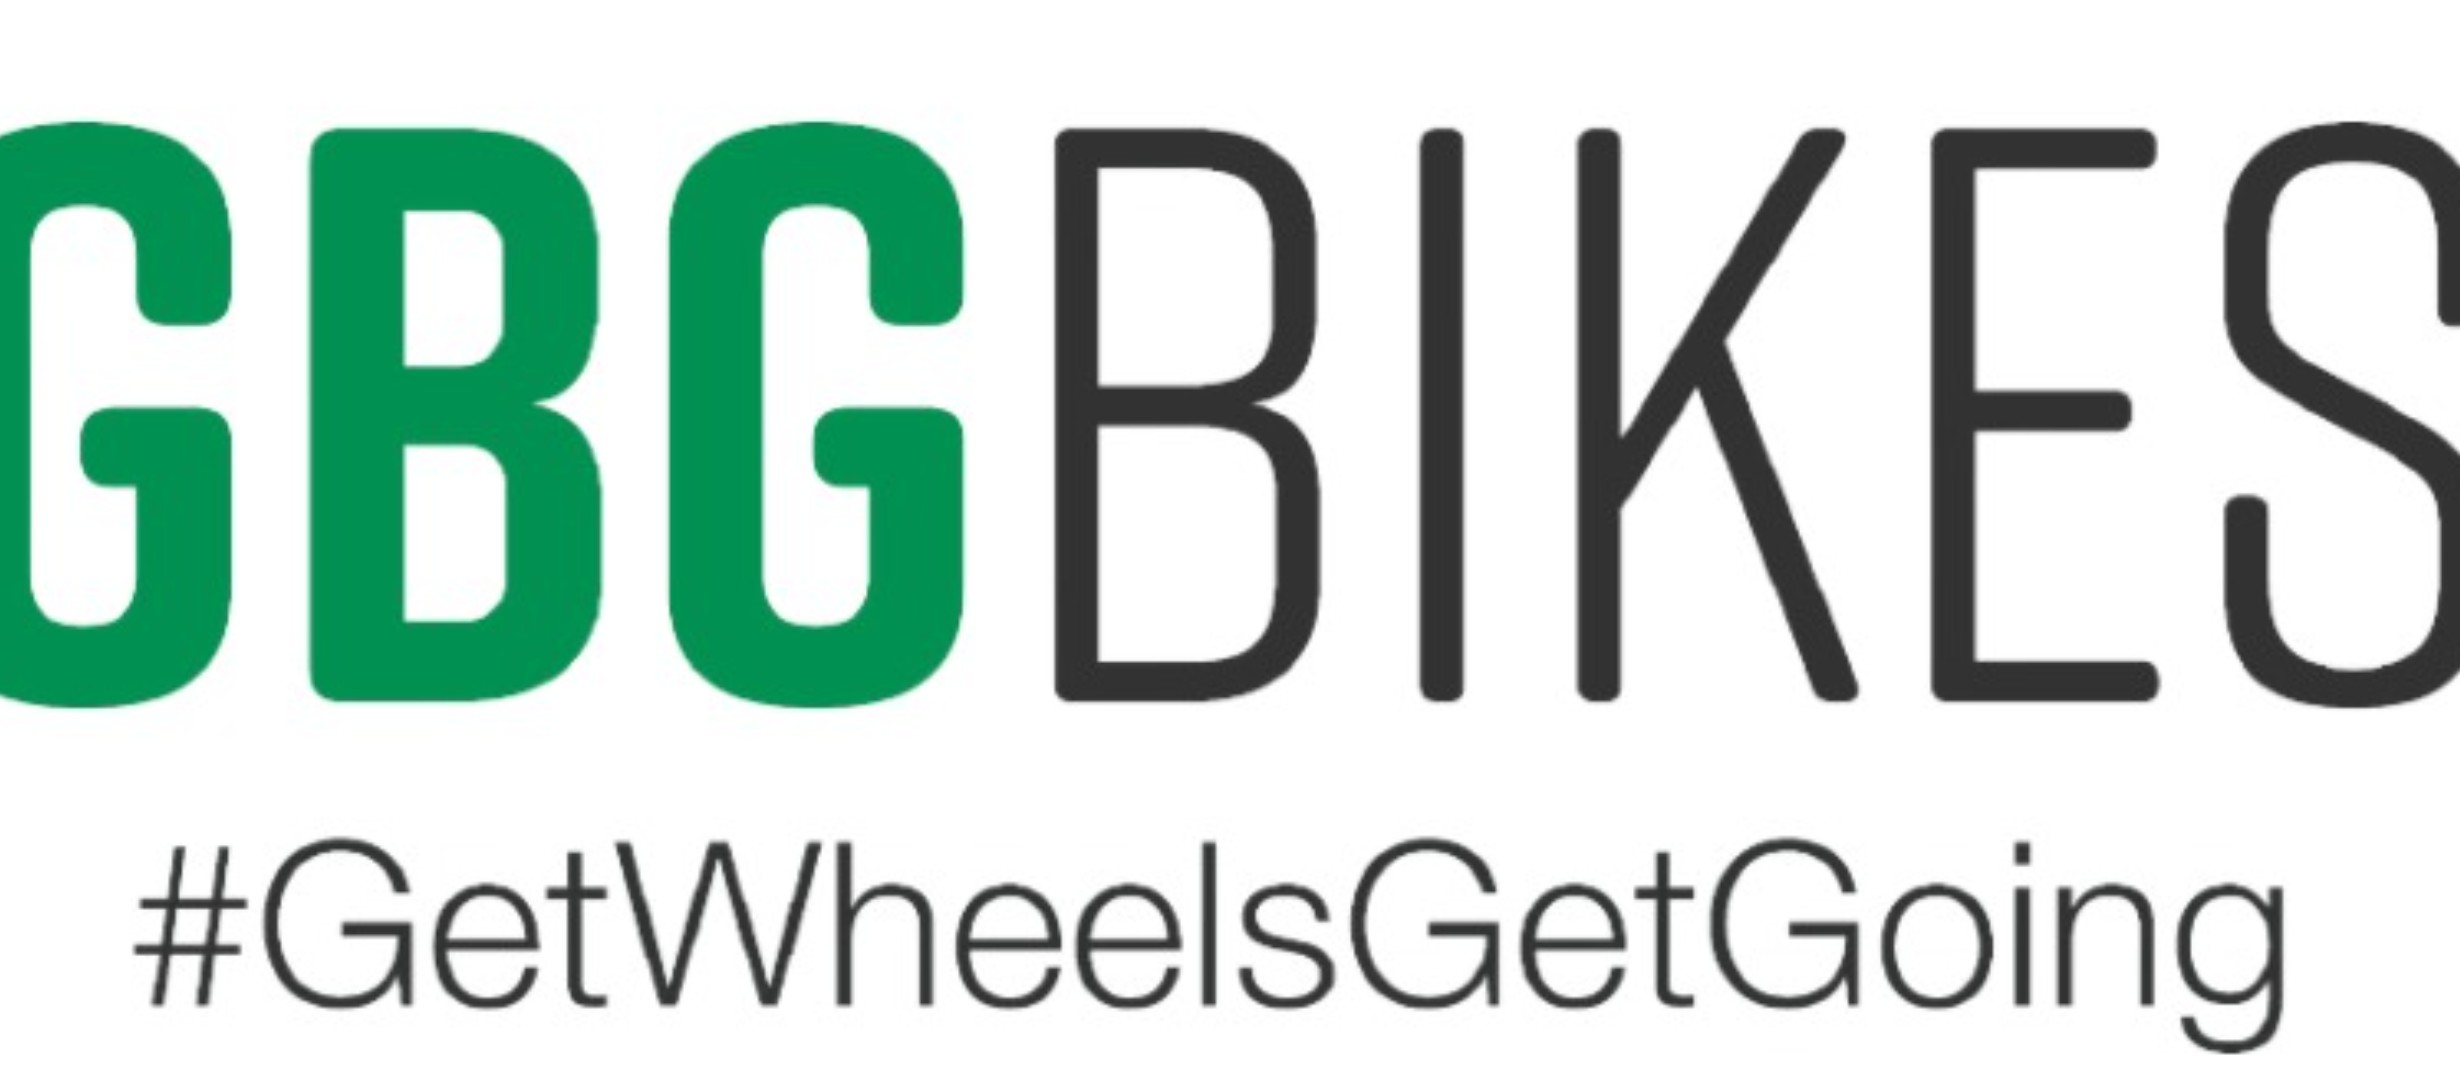 GBG Bikes logo and slogan